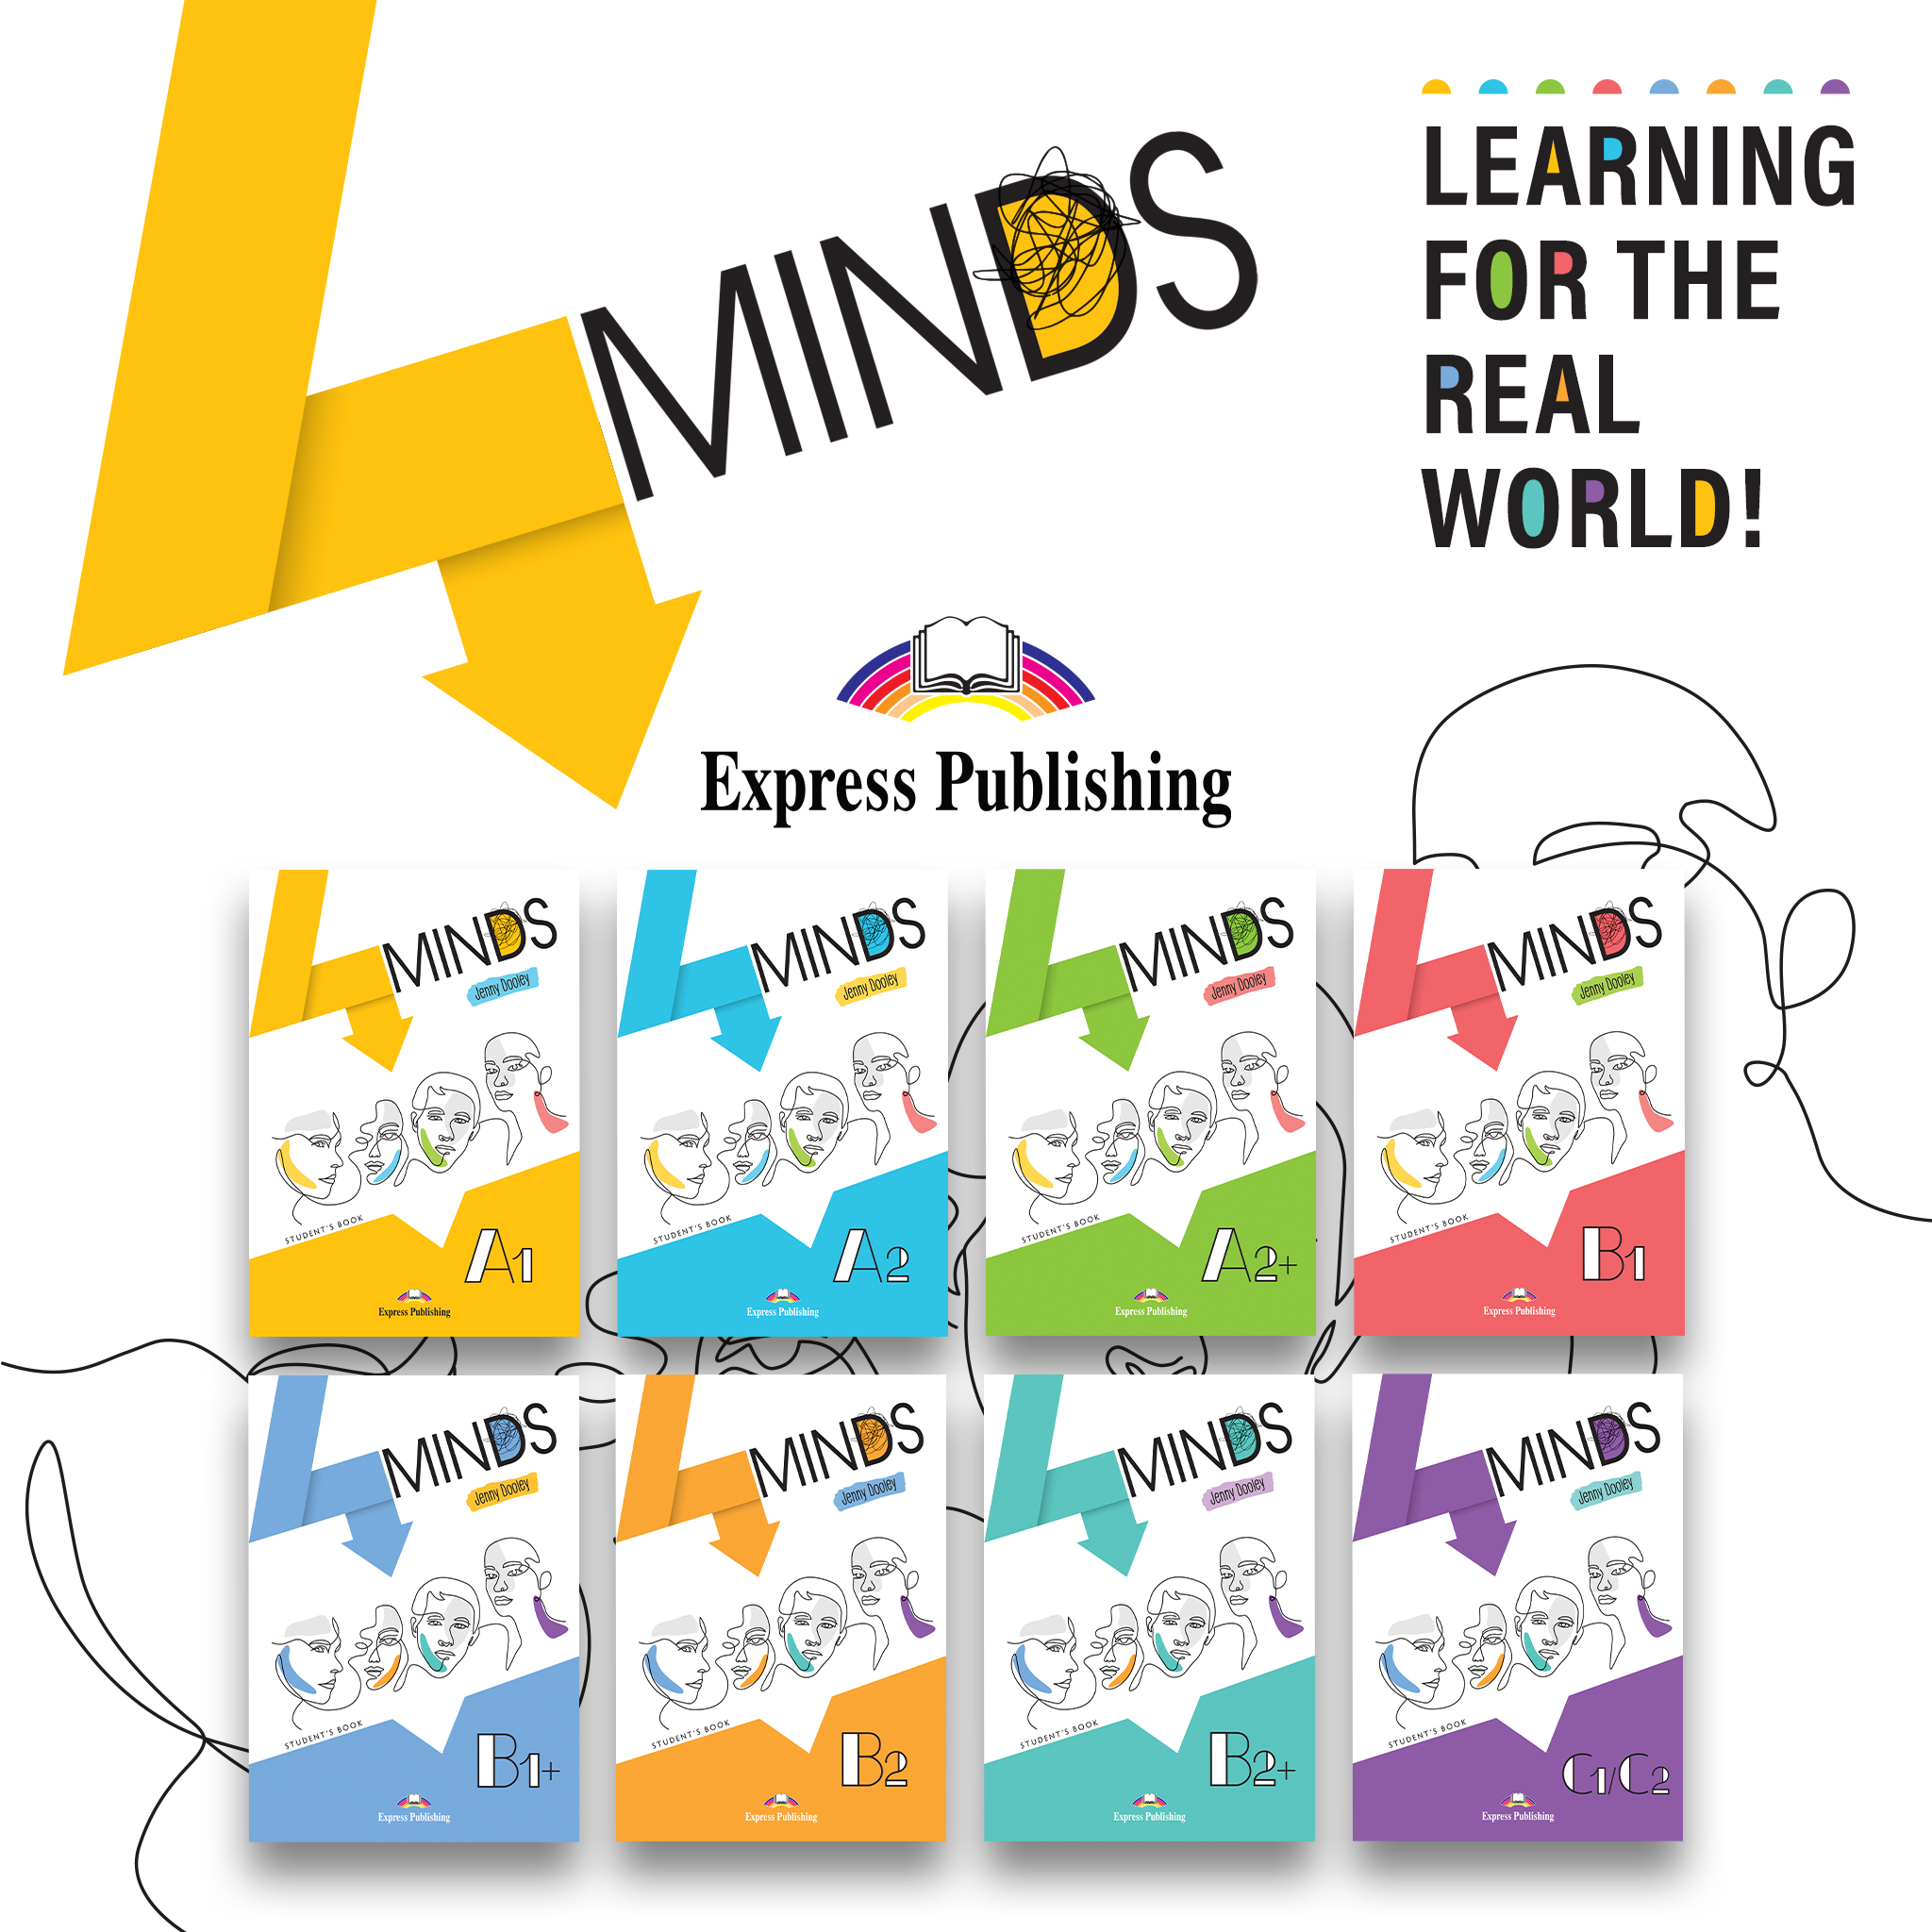 4 minds express publishing series